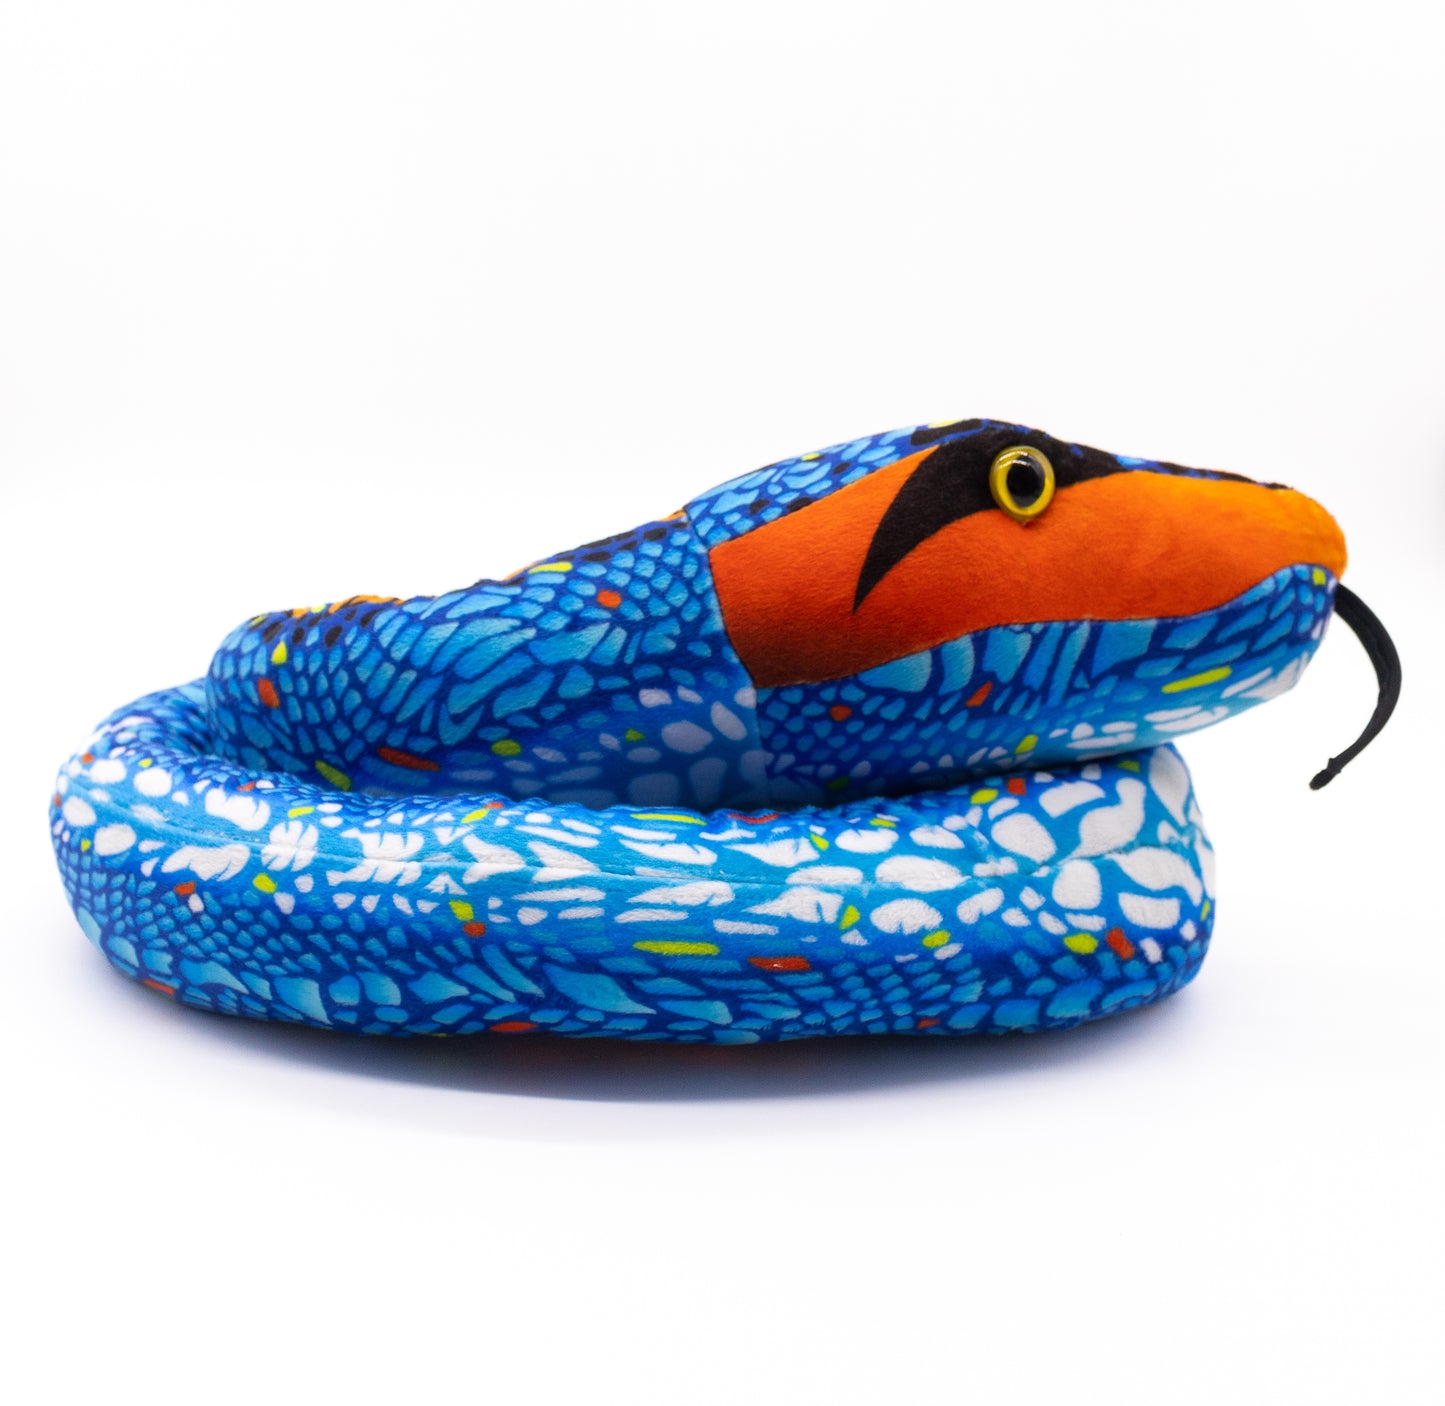 Snake Plush - Blue/Orange